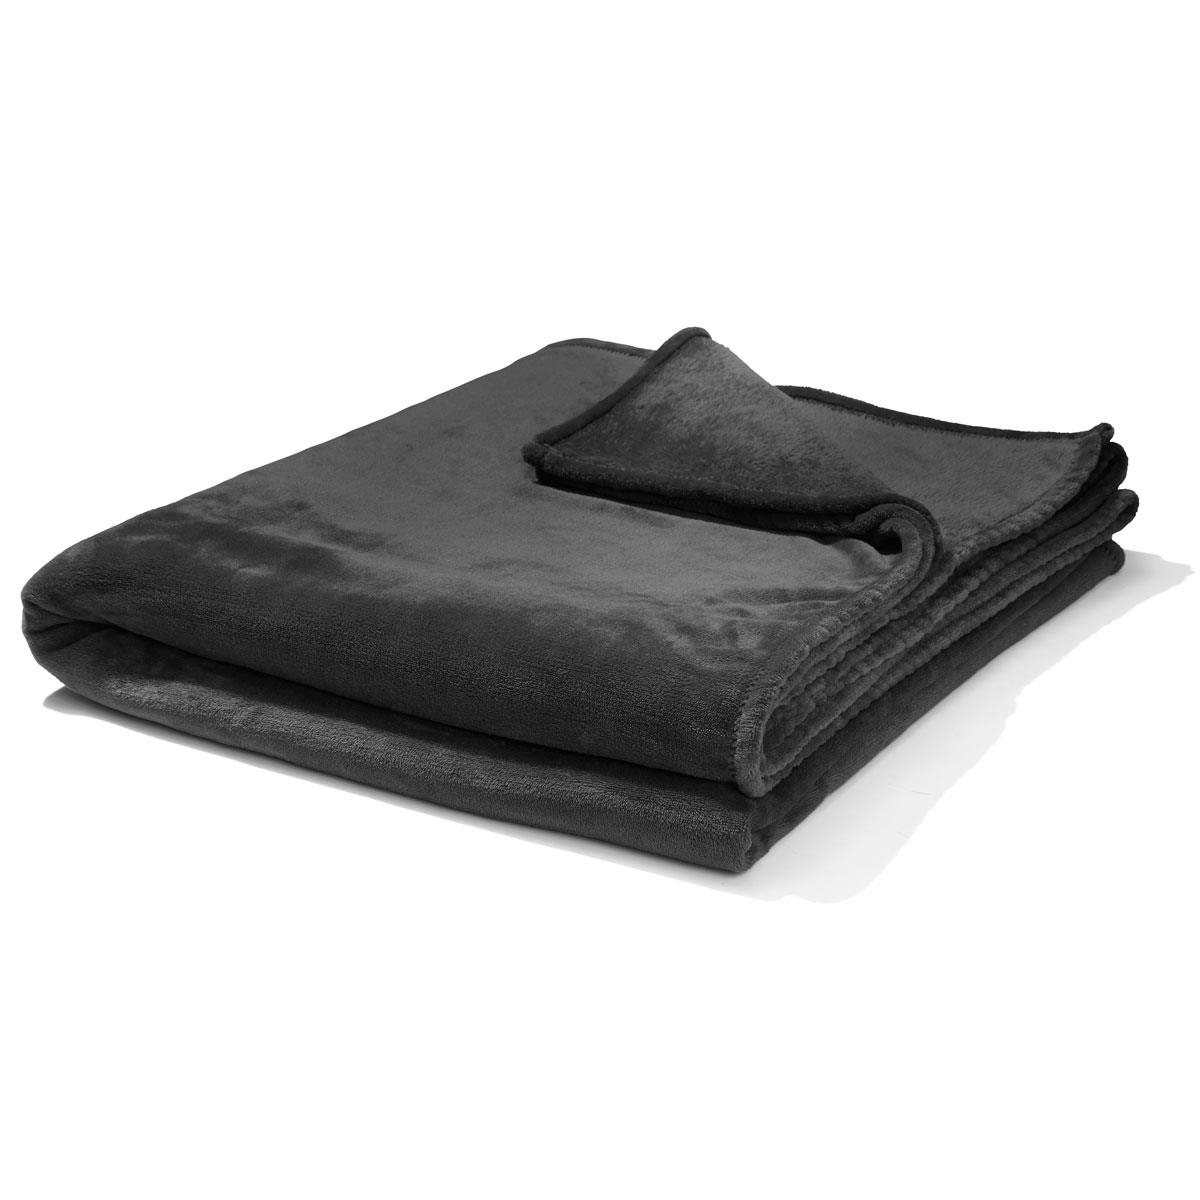 Soft Touch Blanket - Single Bed, Black | Kmart